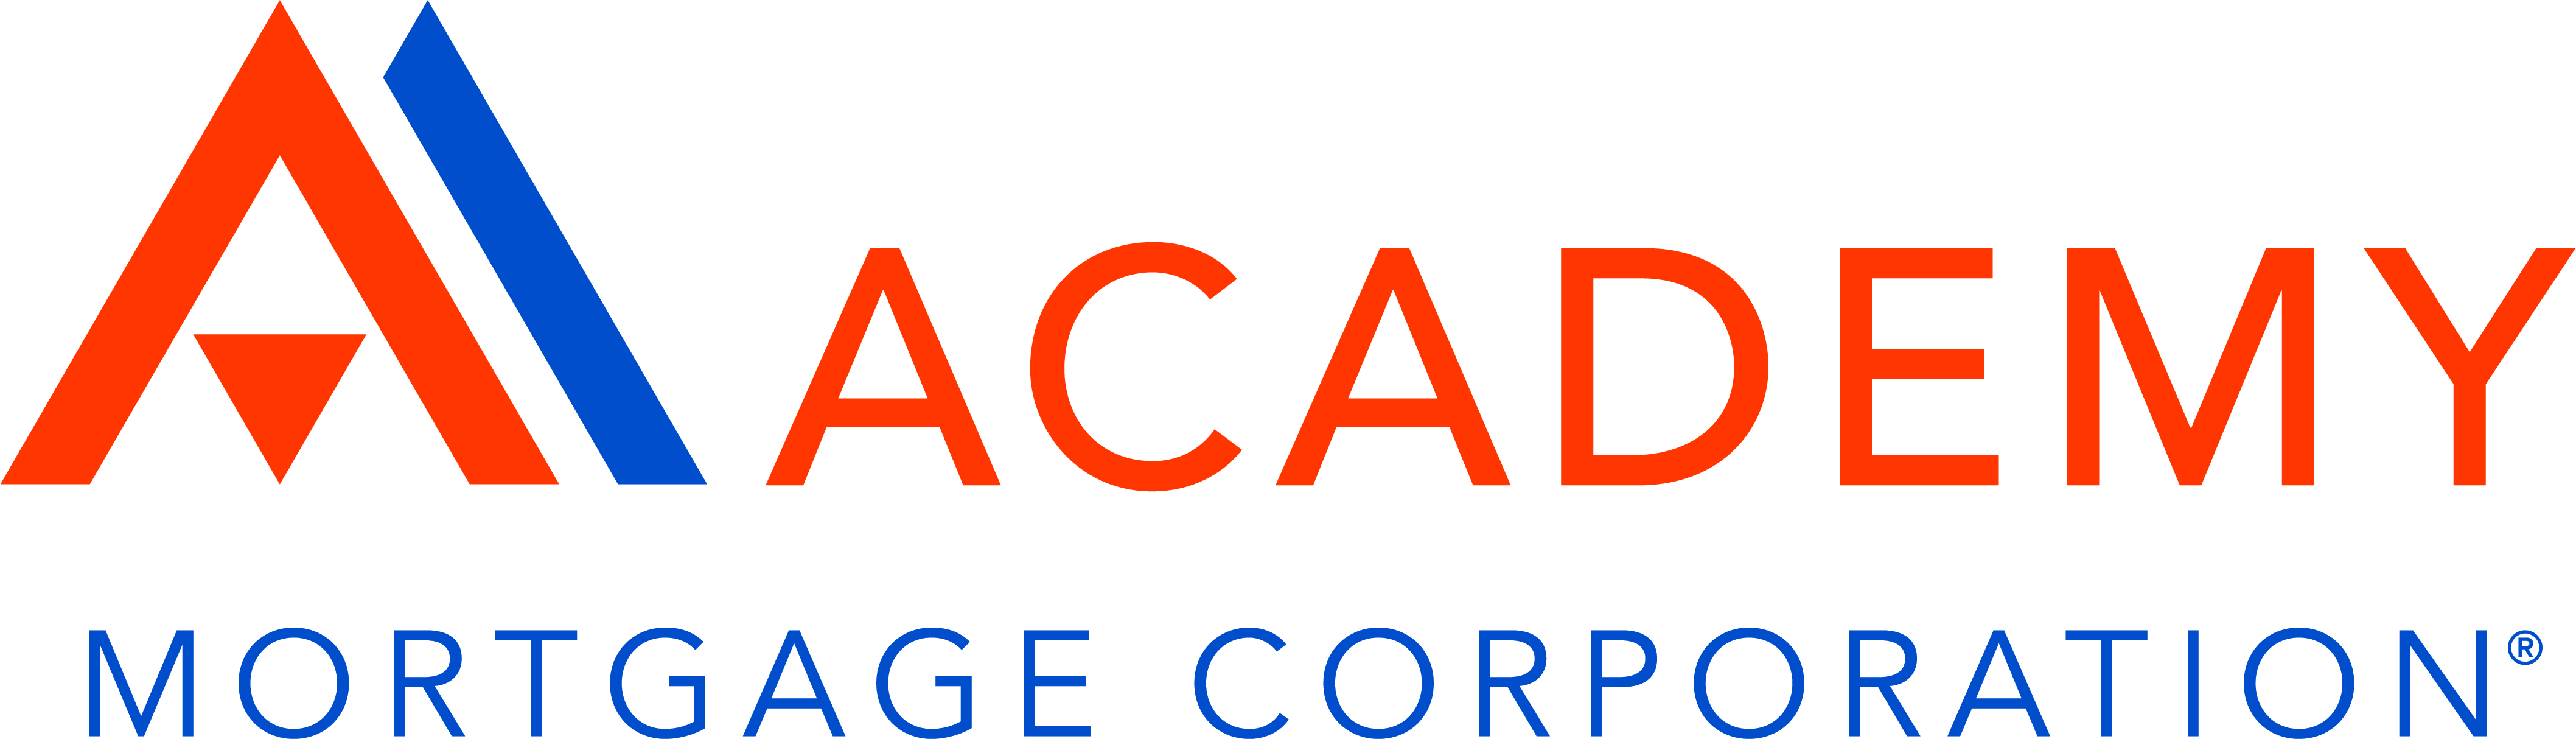 Academy_Mortgage